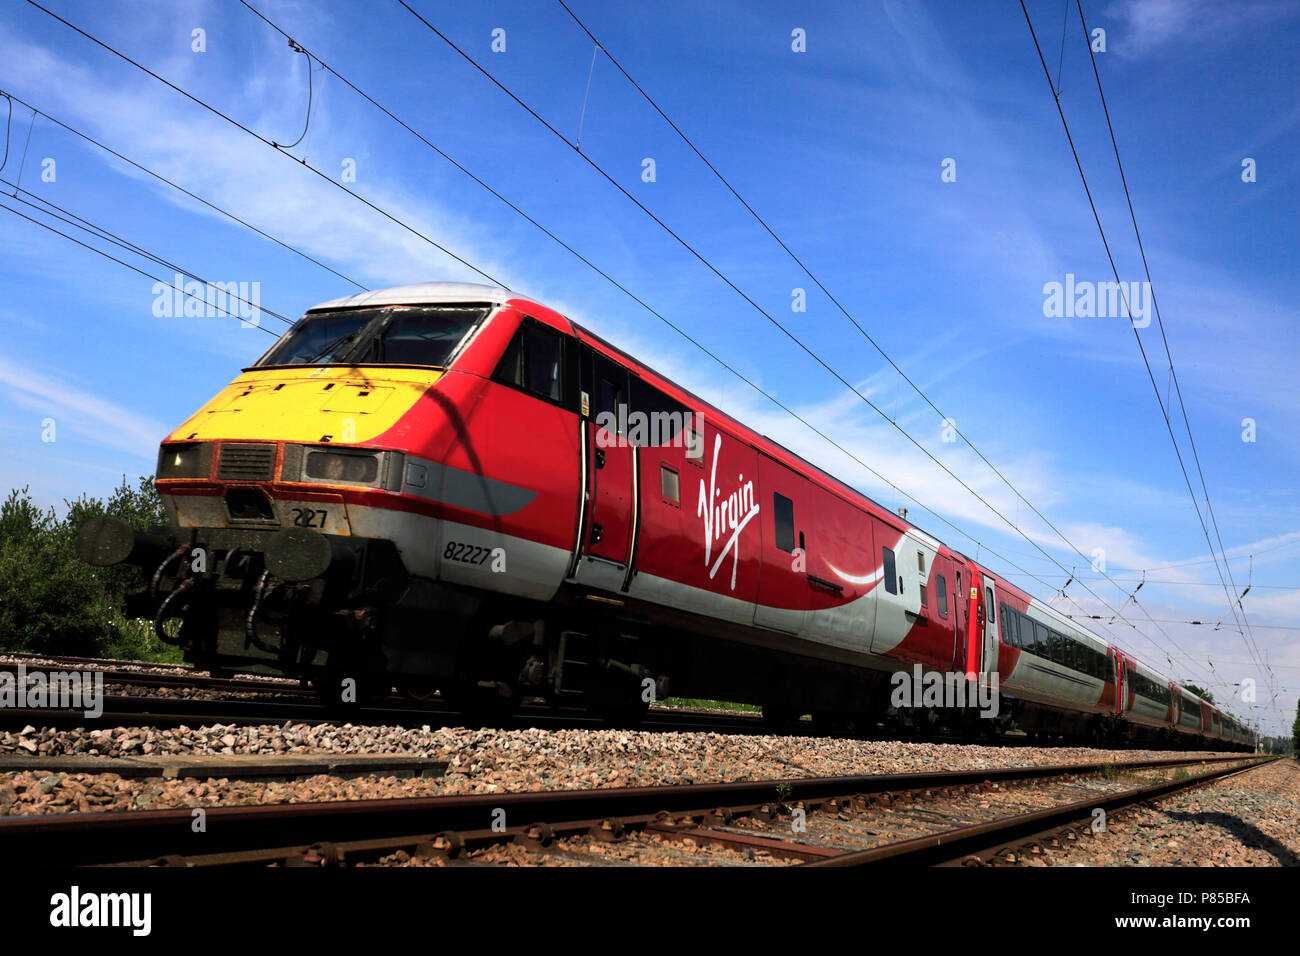 Virgin trains 82 227, East Coast Main Line Railway, Peterborough, Cambridgeshire, England, UK Stock Photo